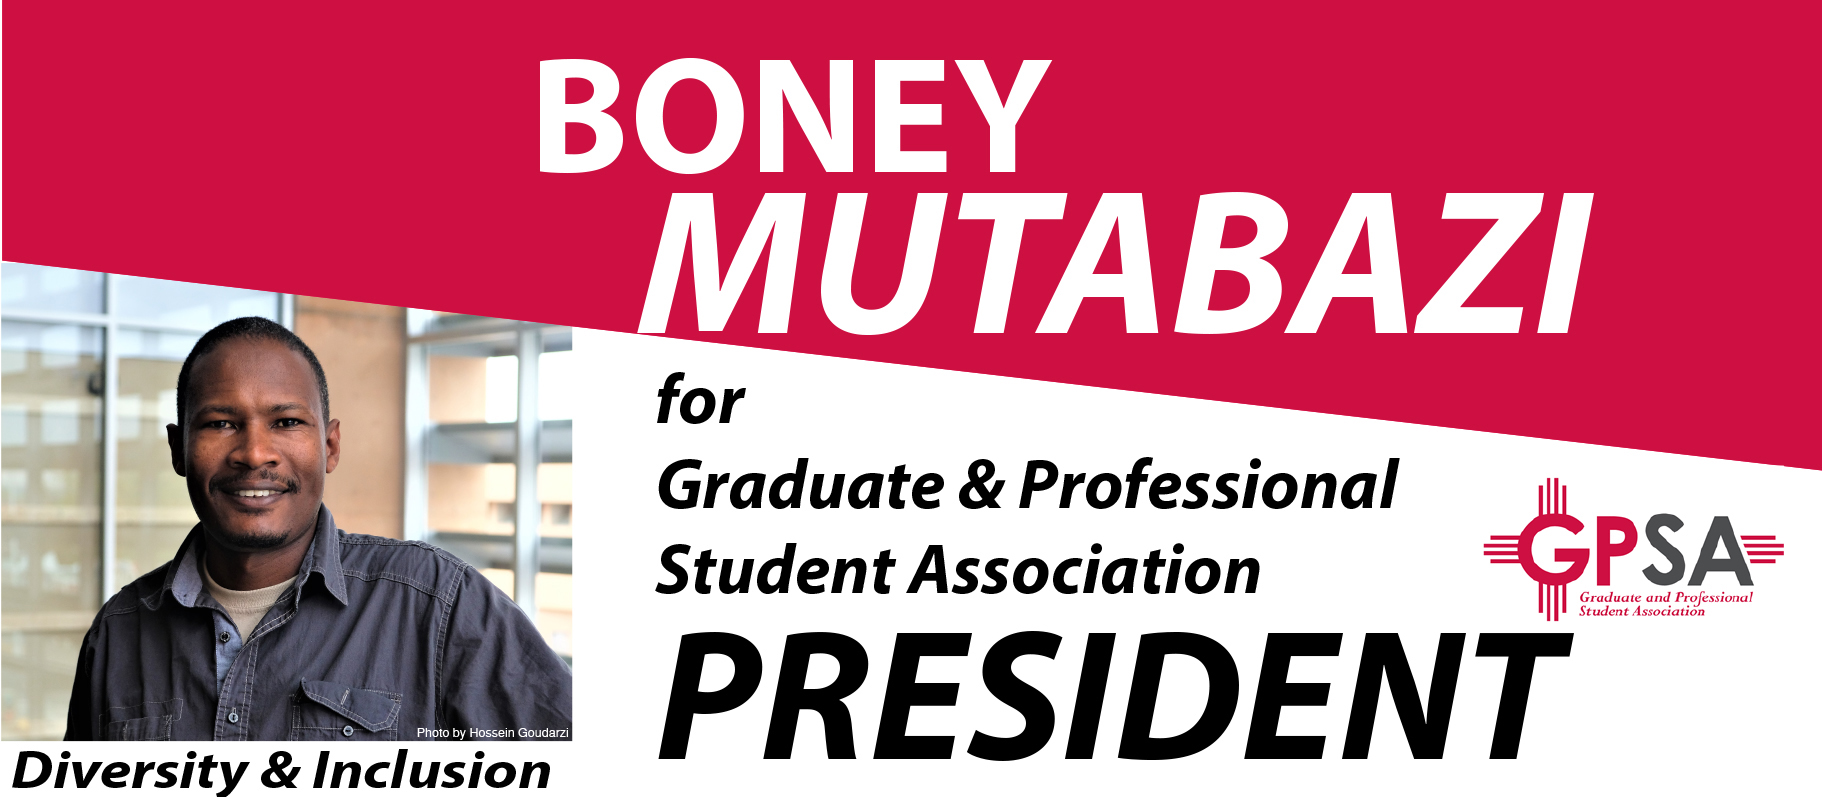 Boney Mutabazi Campaign Poster